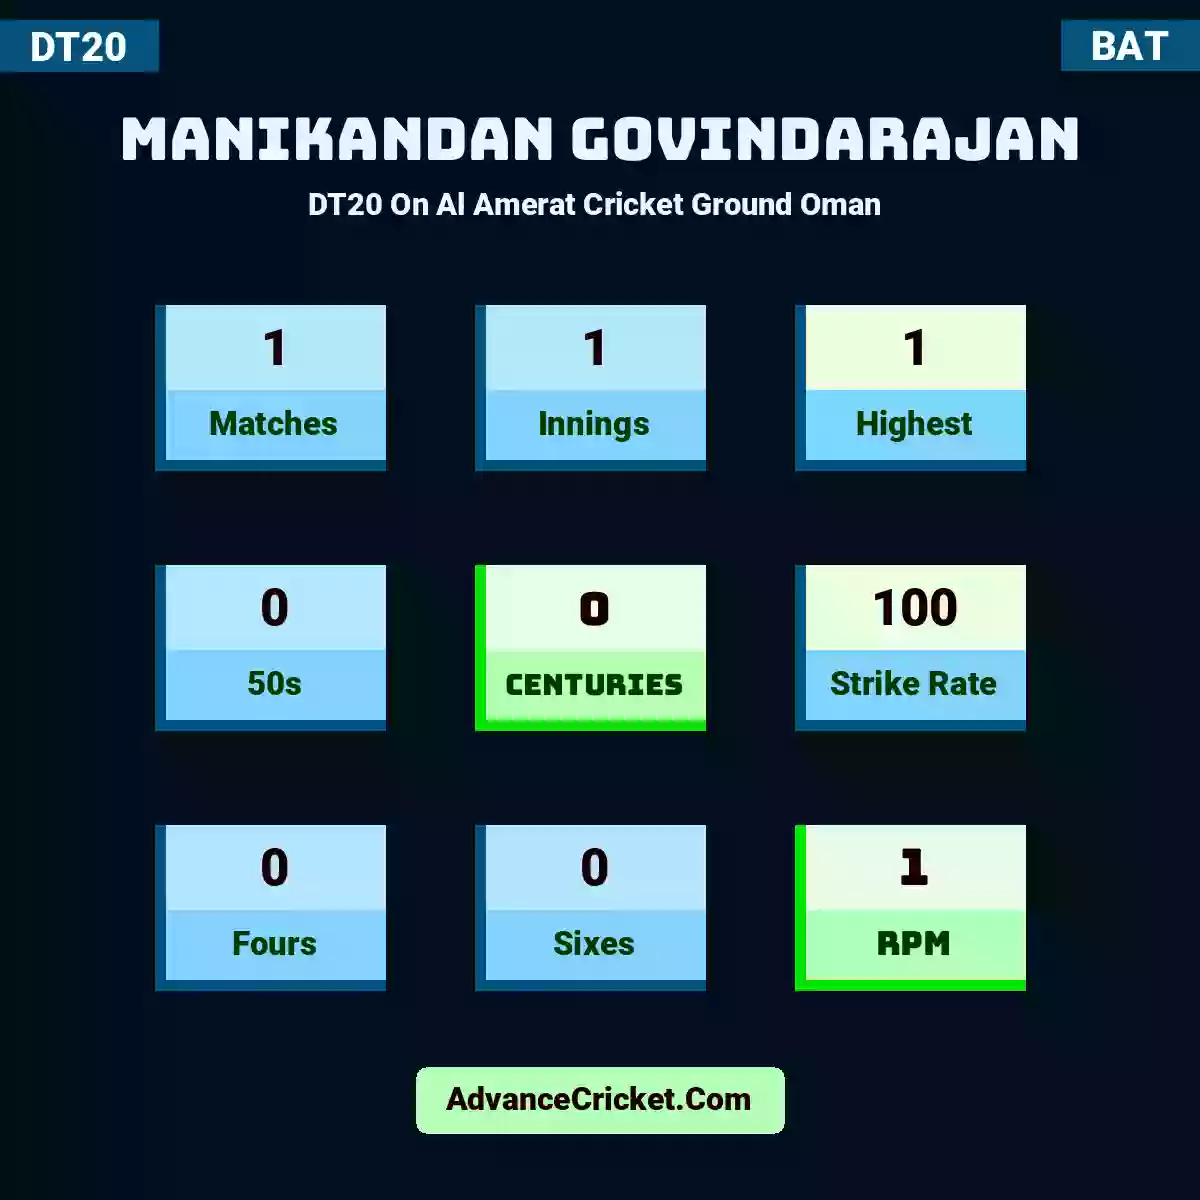 Manikandan Govindarajan DT20  On Al Amerat Cricket Ground Oman , Manikandan Govindarajan played 1 matches, scored 1 runs as highest, 0 half-centuries, and 0 centuries, with a strike rate of 100. M.Govindarajan hit 0 fours and 0 sixes, with an RPM of 1.